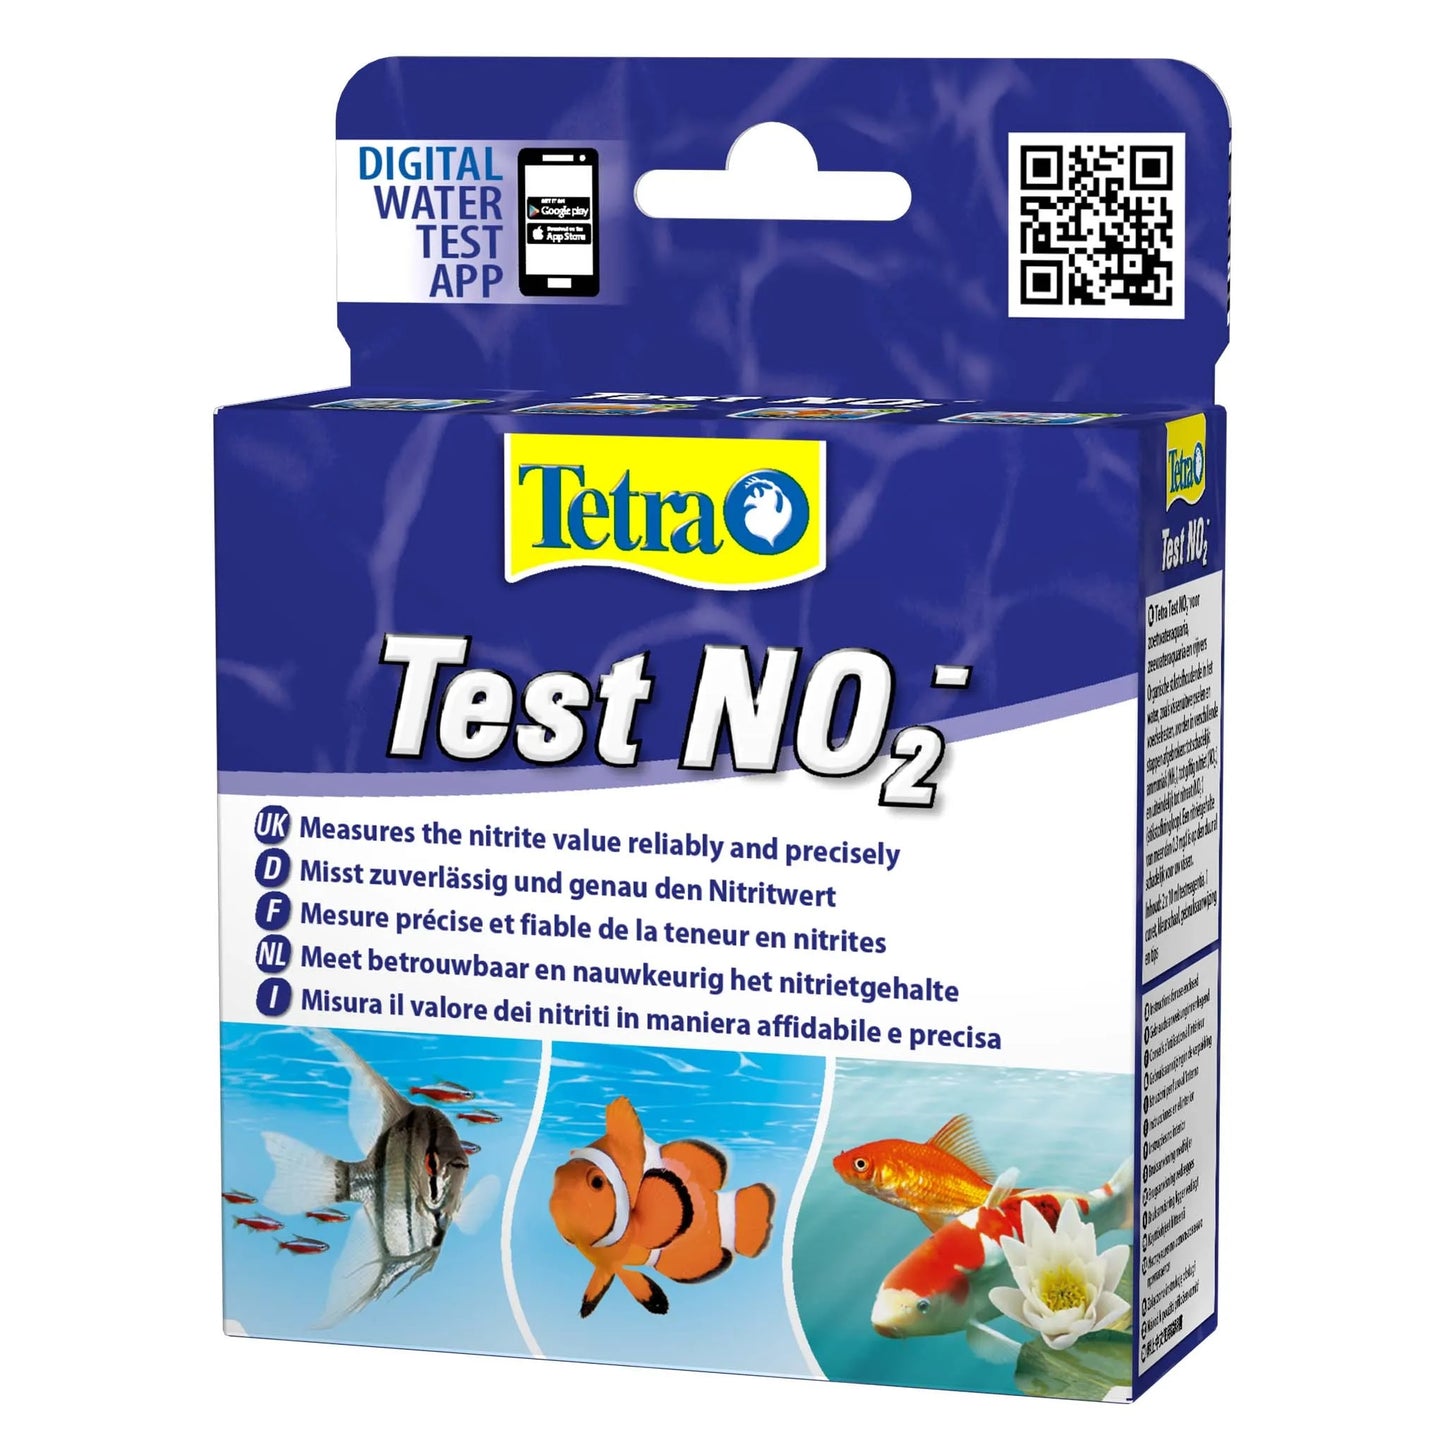 Tetra Test Kits